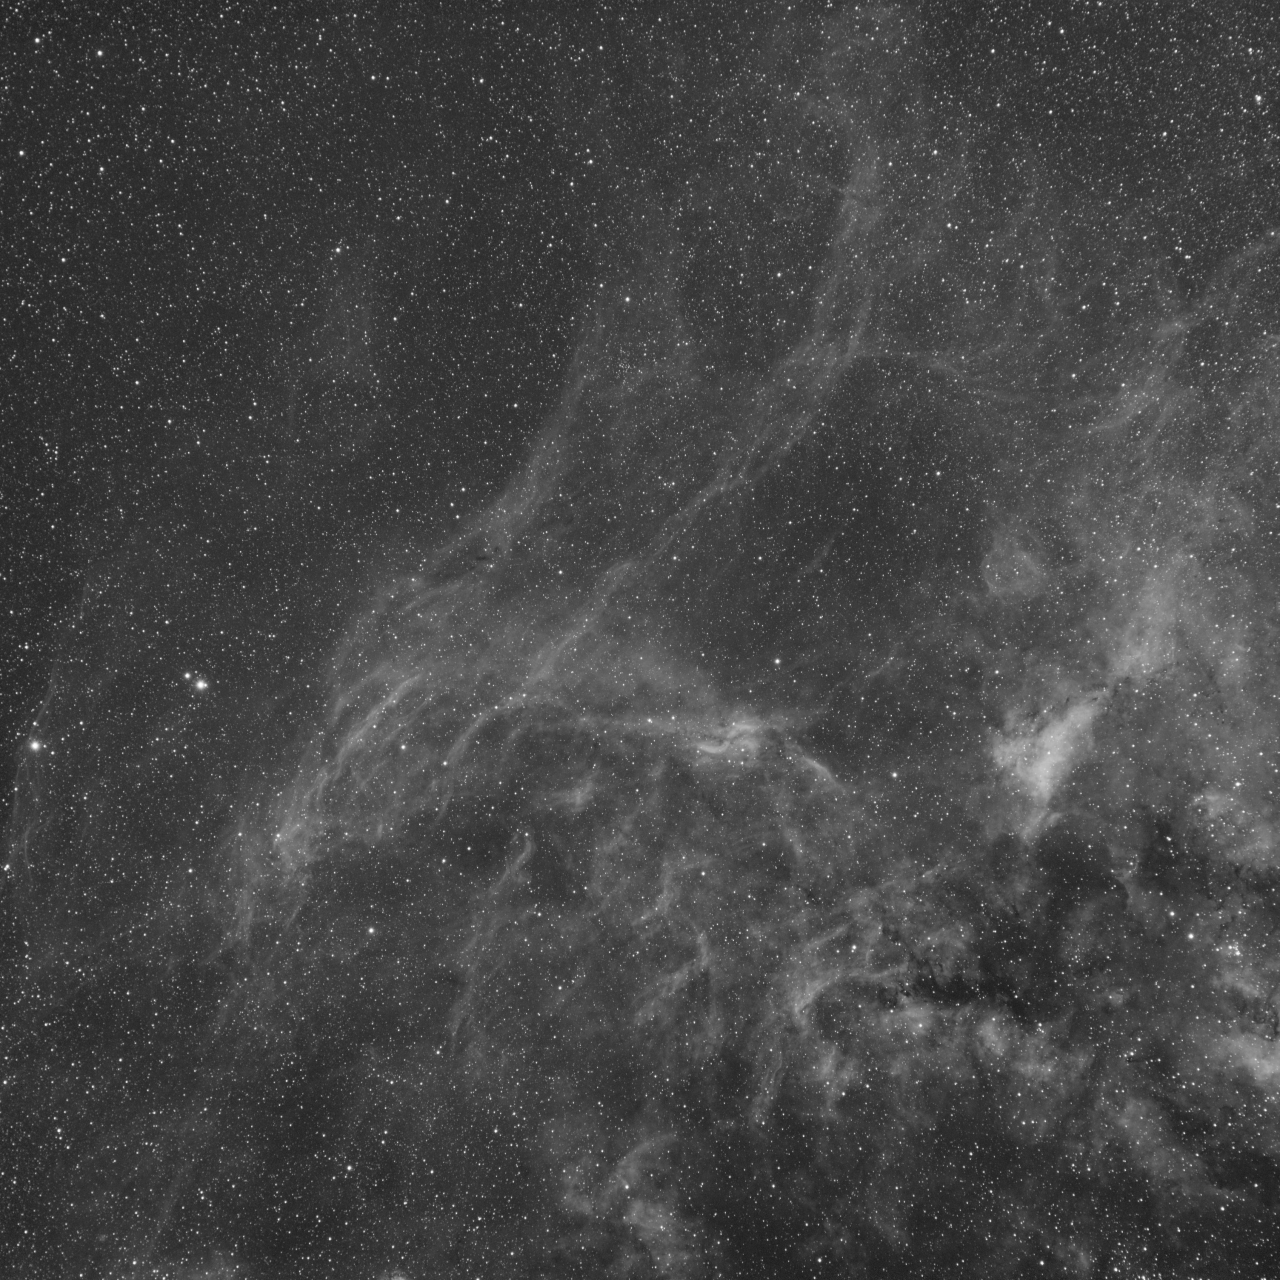 Cygnus near DWB111 - Ha